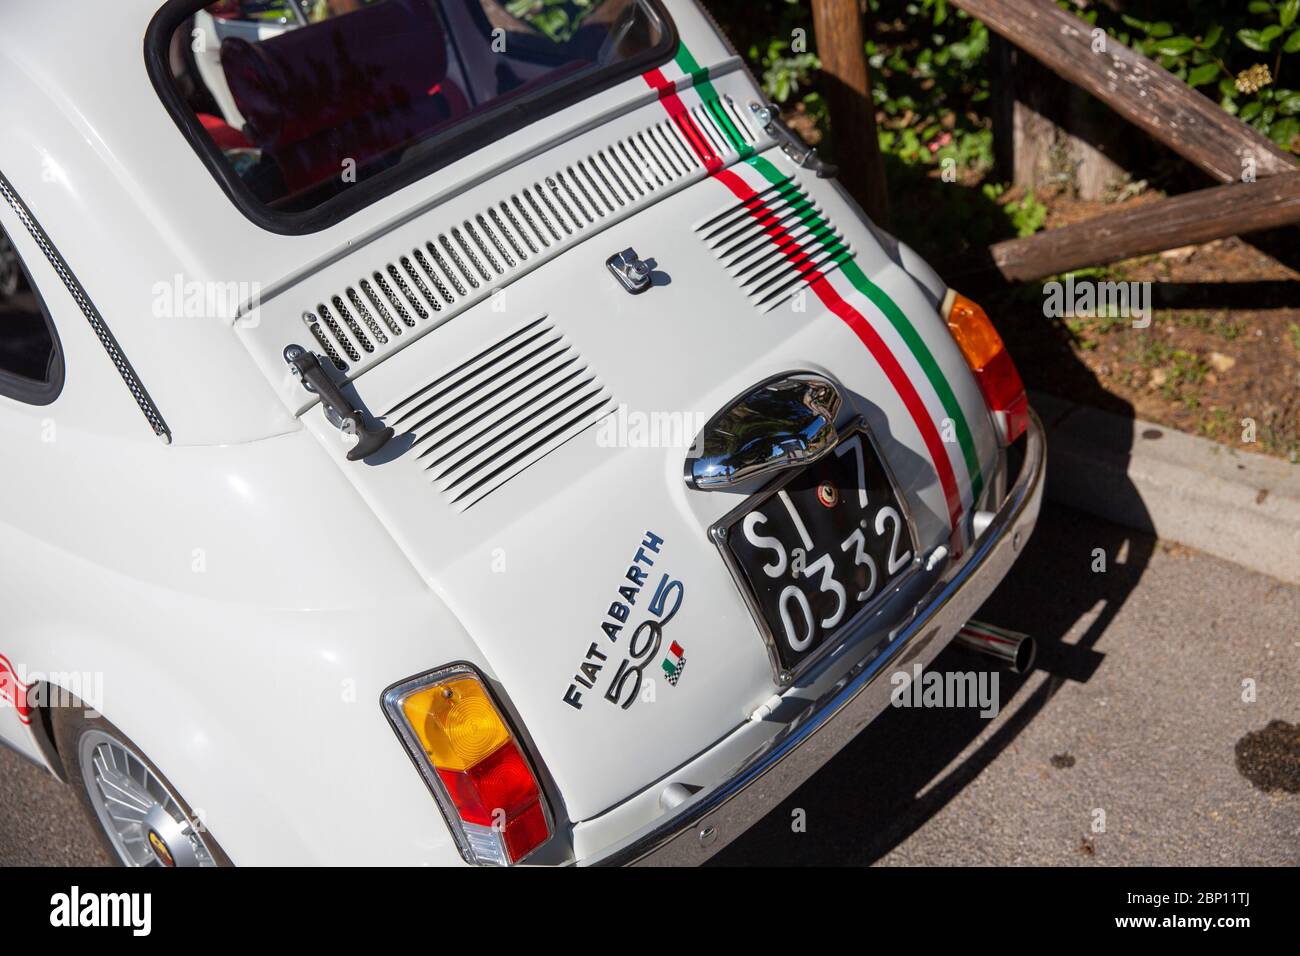 White Fiat Abarth 595 classic italian car racing in the  Coppa Del Chiant racing event in Chianti region of Tuscany,Italy Stock Photo